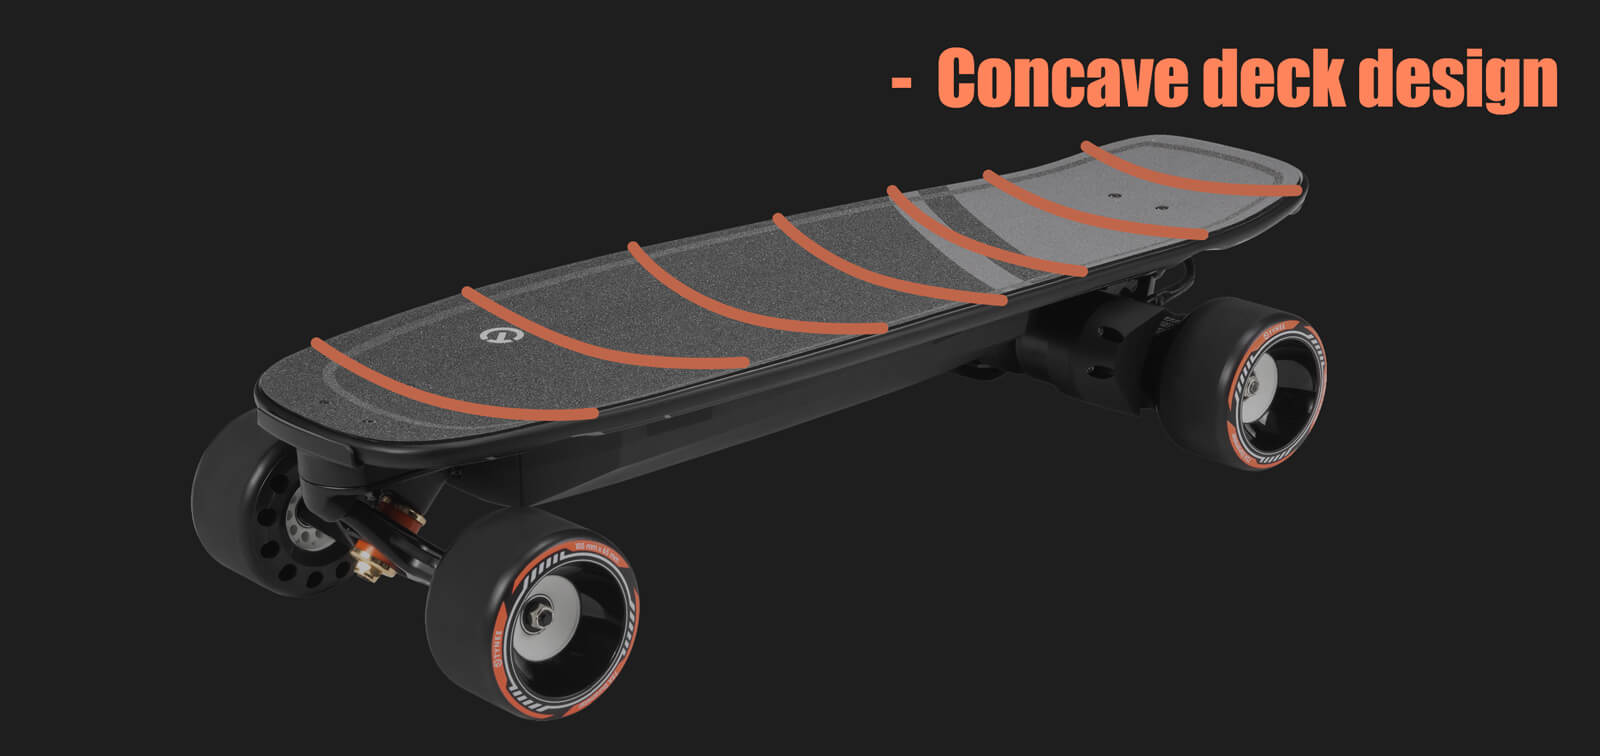 Tynee-mini-3-pro-portable-electric-skateboard-concave-deck